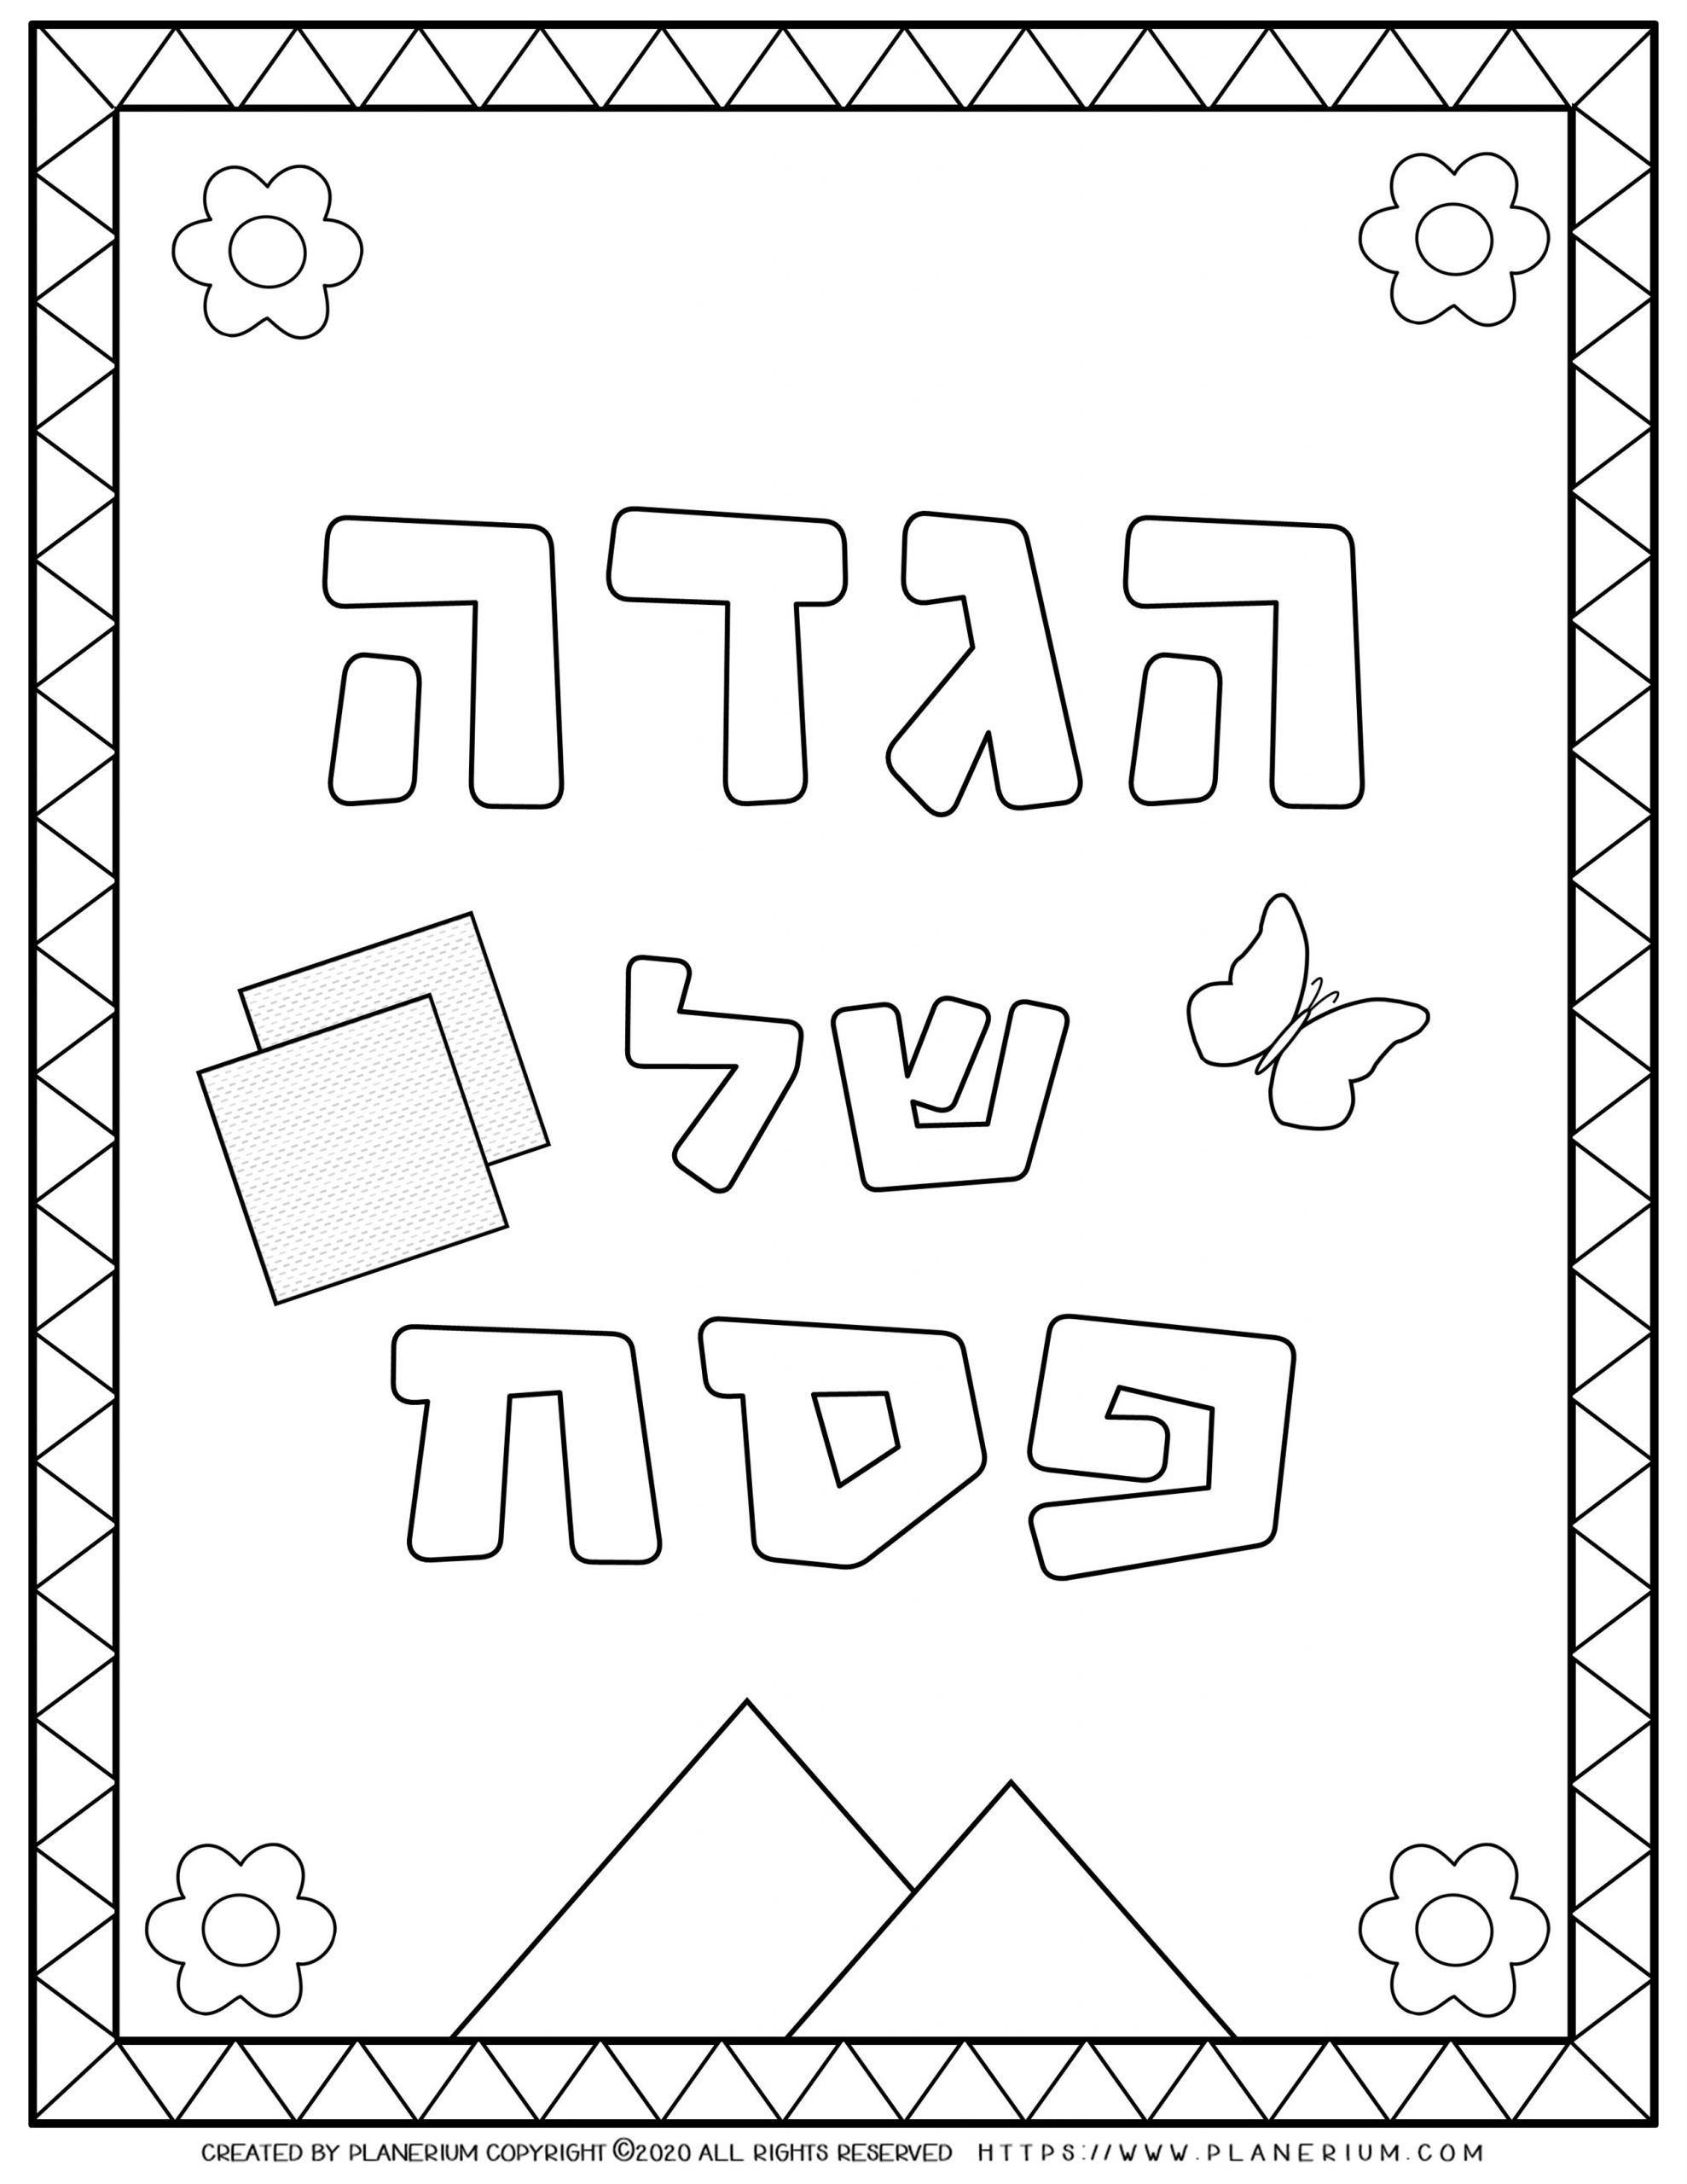 Download Passover - Coloring Page - Haggadah Book Cover in Hebrew ...